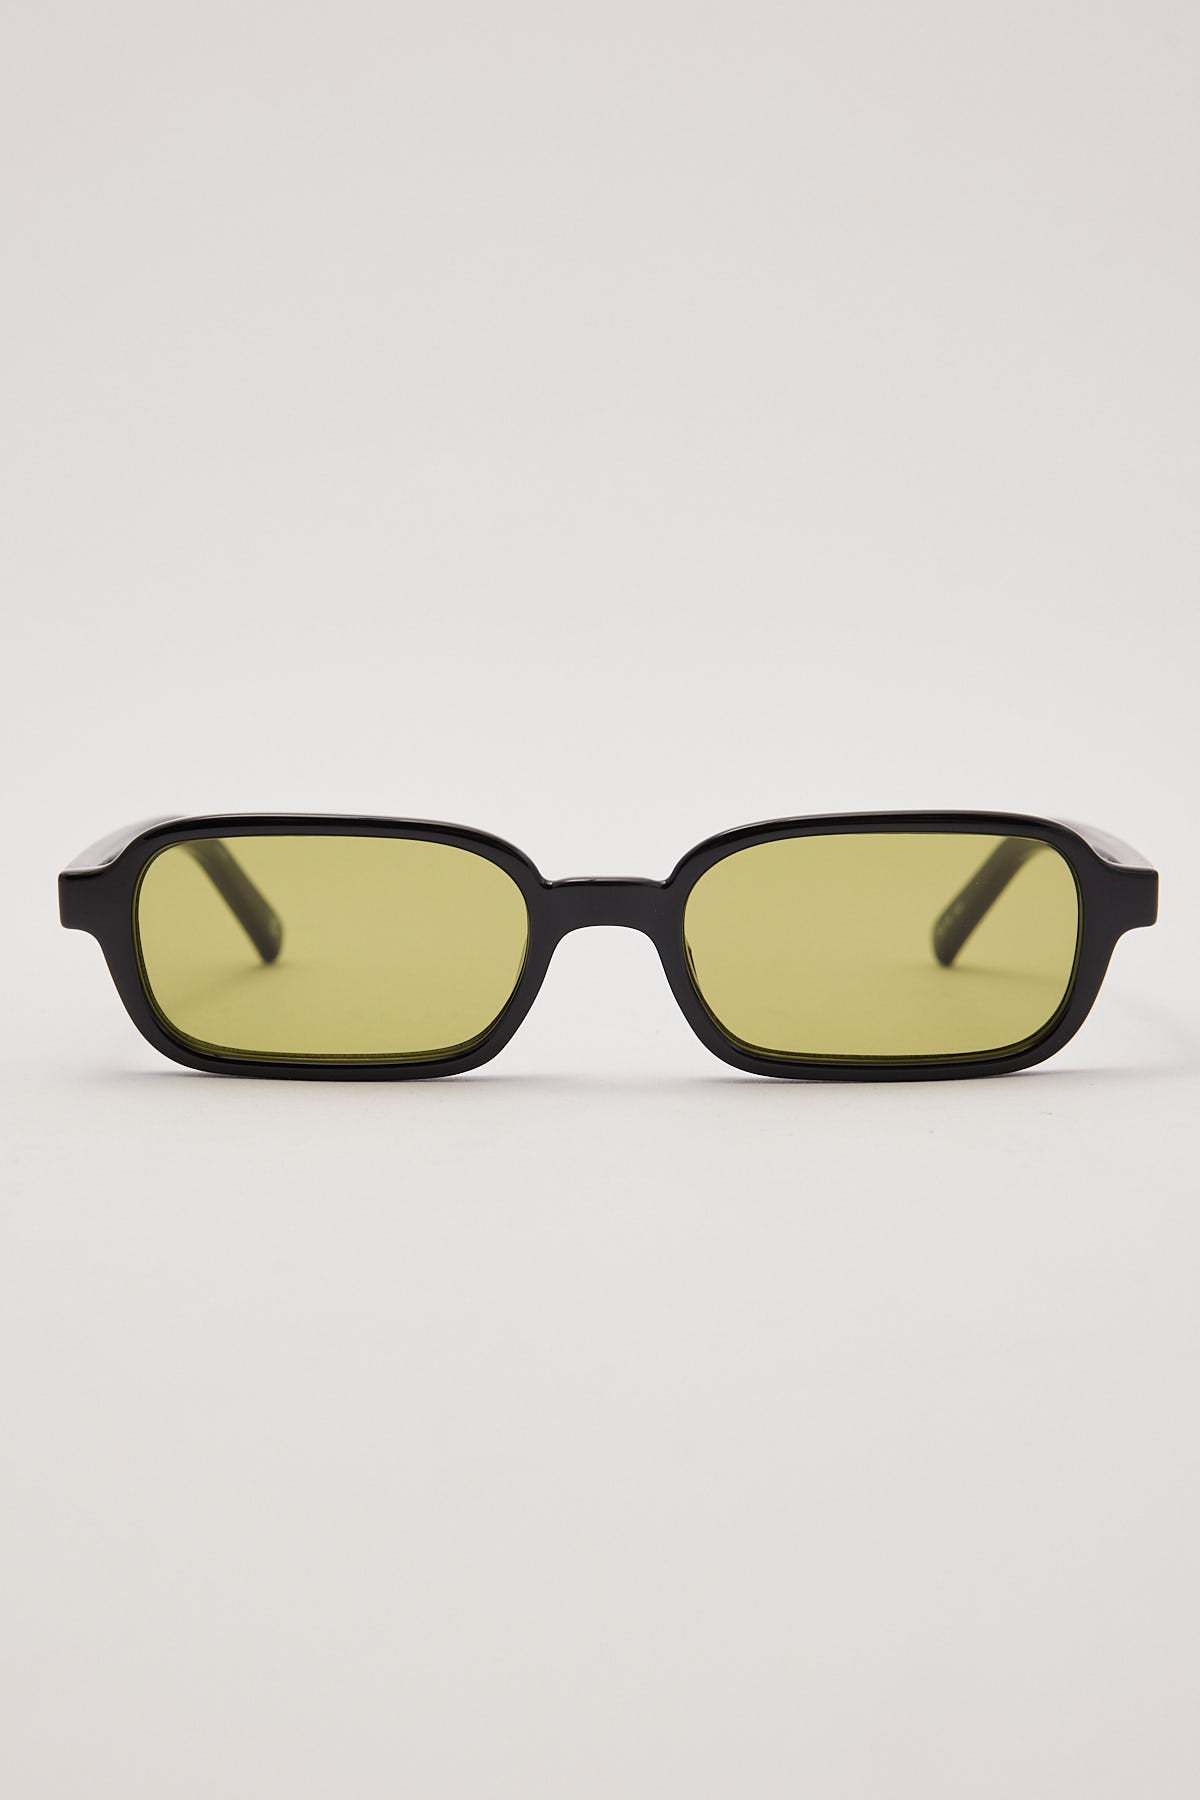 Le Specs Pilfer blk/olv Black/Olive